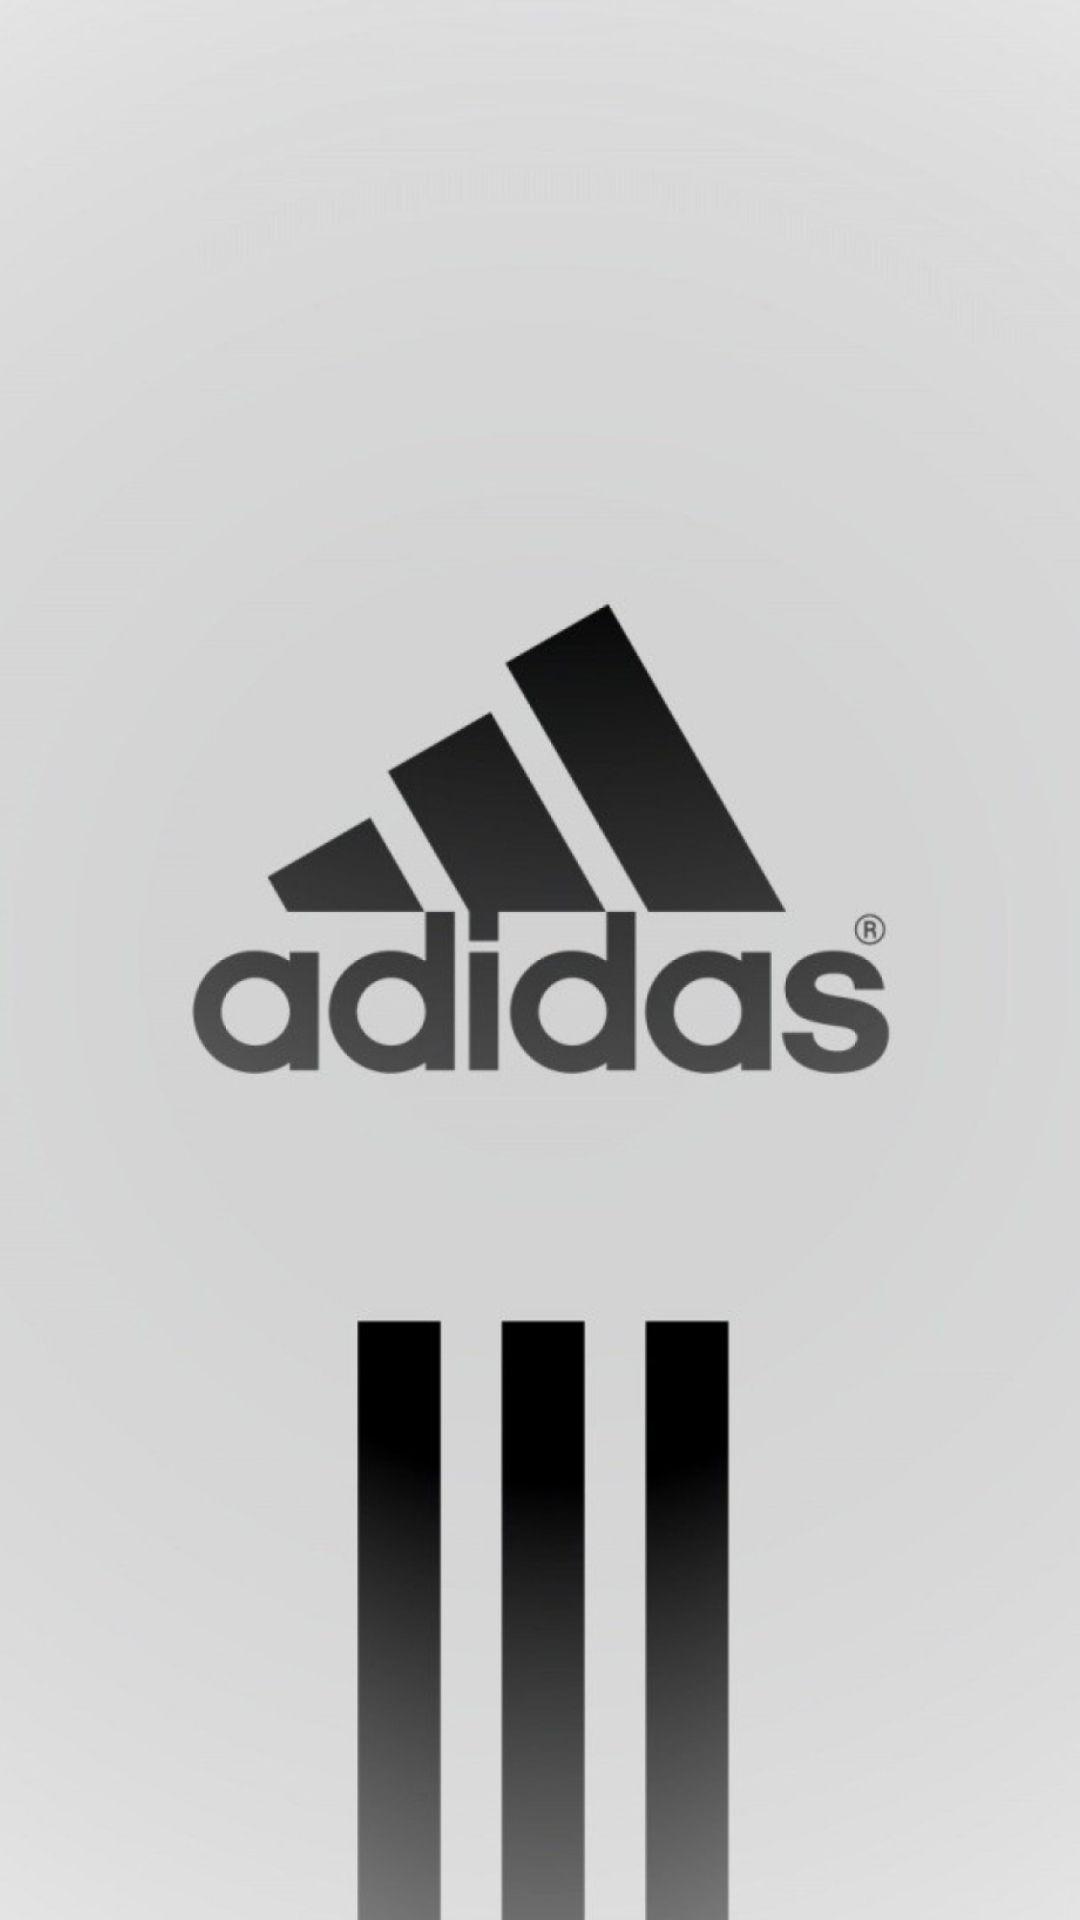 Adidas Logo Iphone Wallpapers Top Free Adidas Logo Iphone Backgrounds Wallpaperaccess